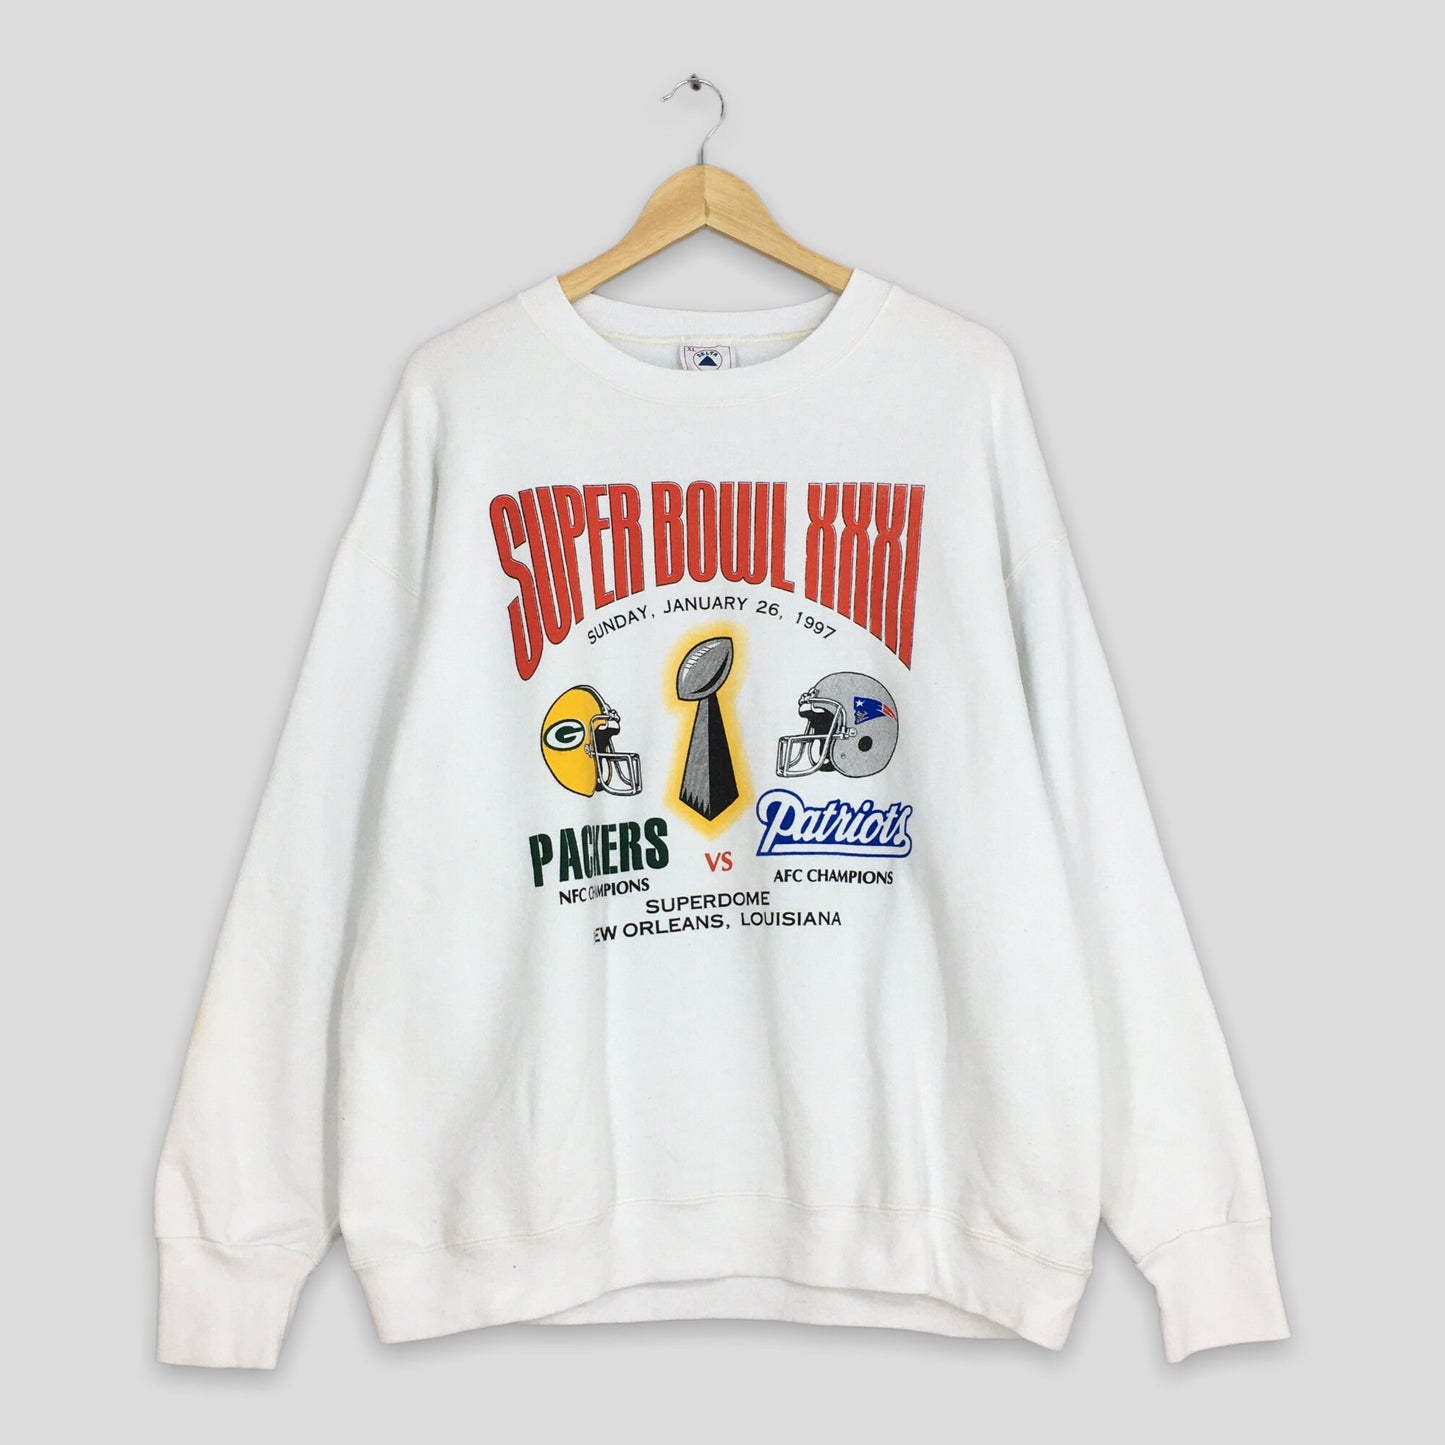 Super Bowl XXXI Champion Nfl Sweatshirt XLarge